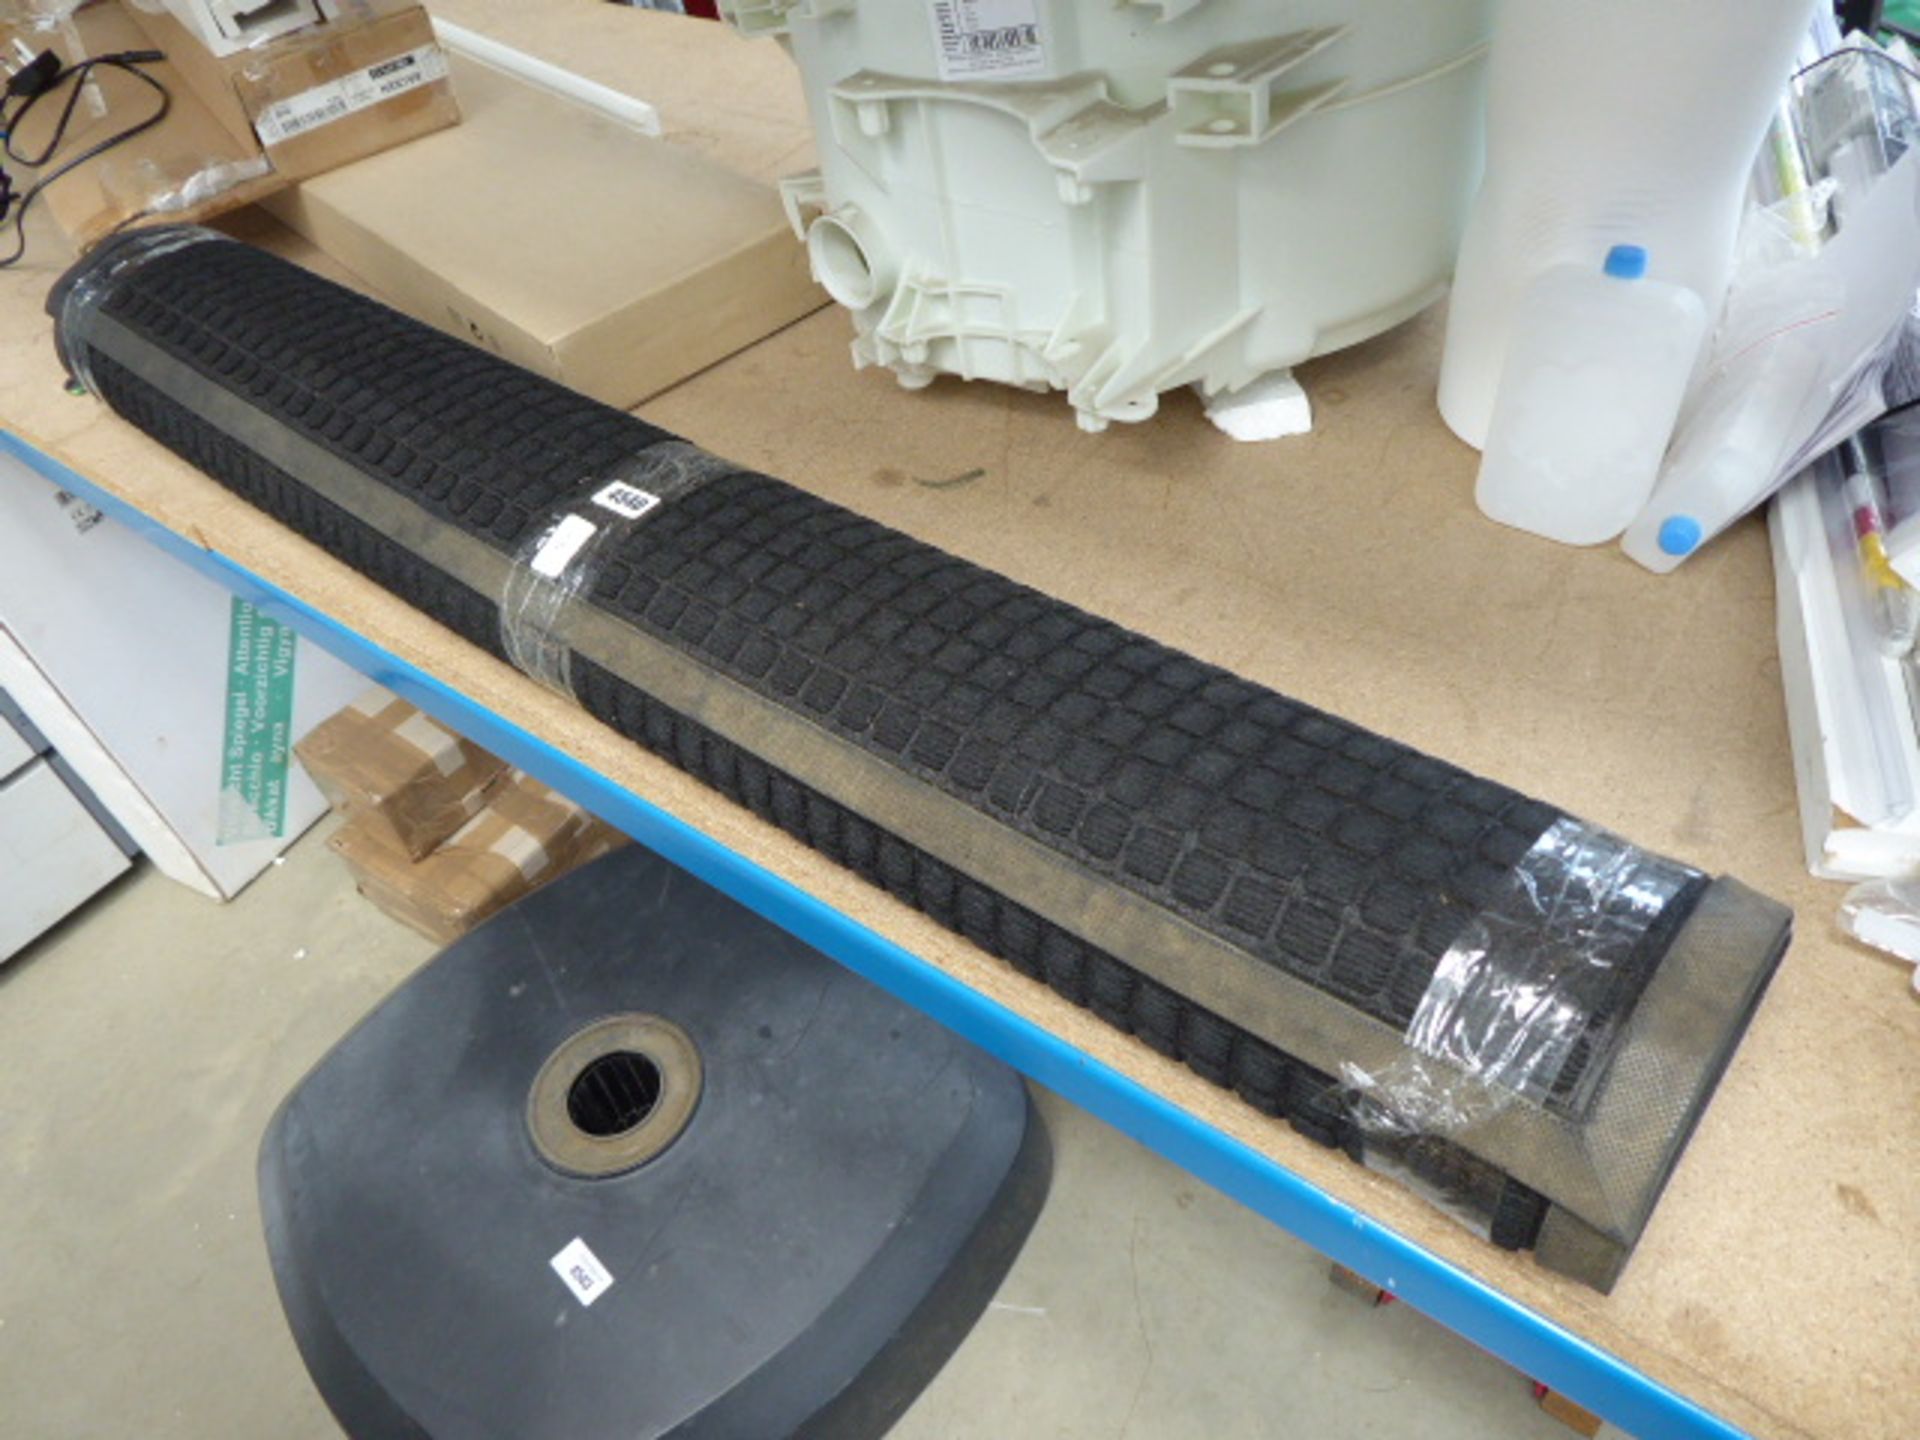 Black rubber backed mat